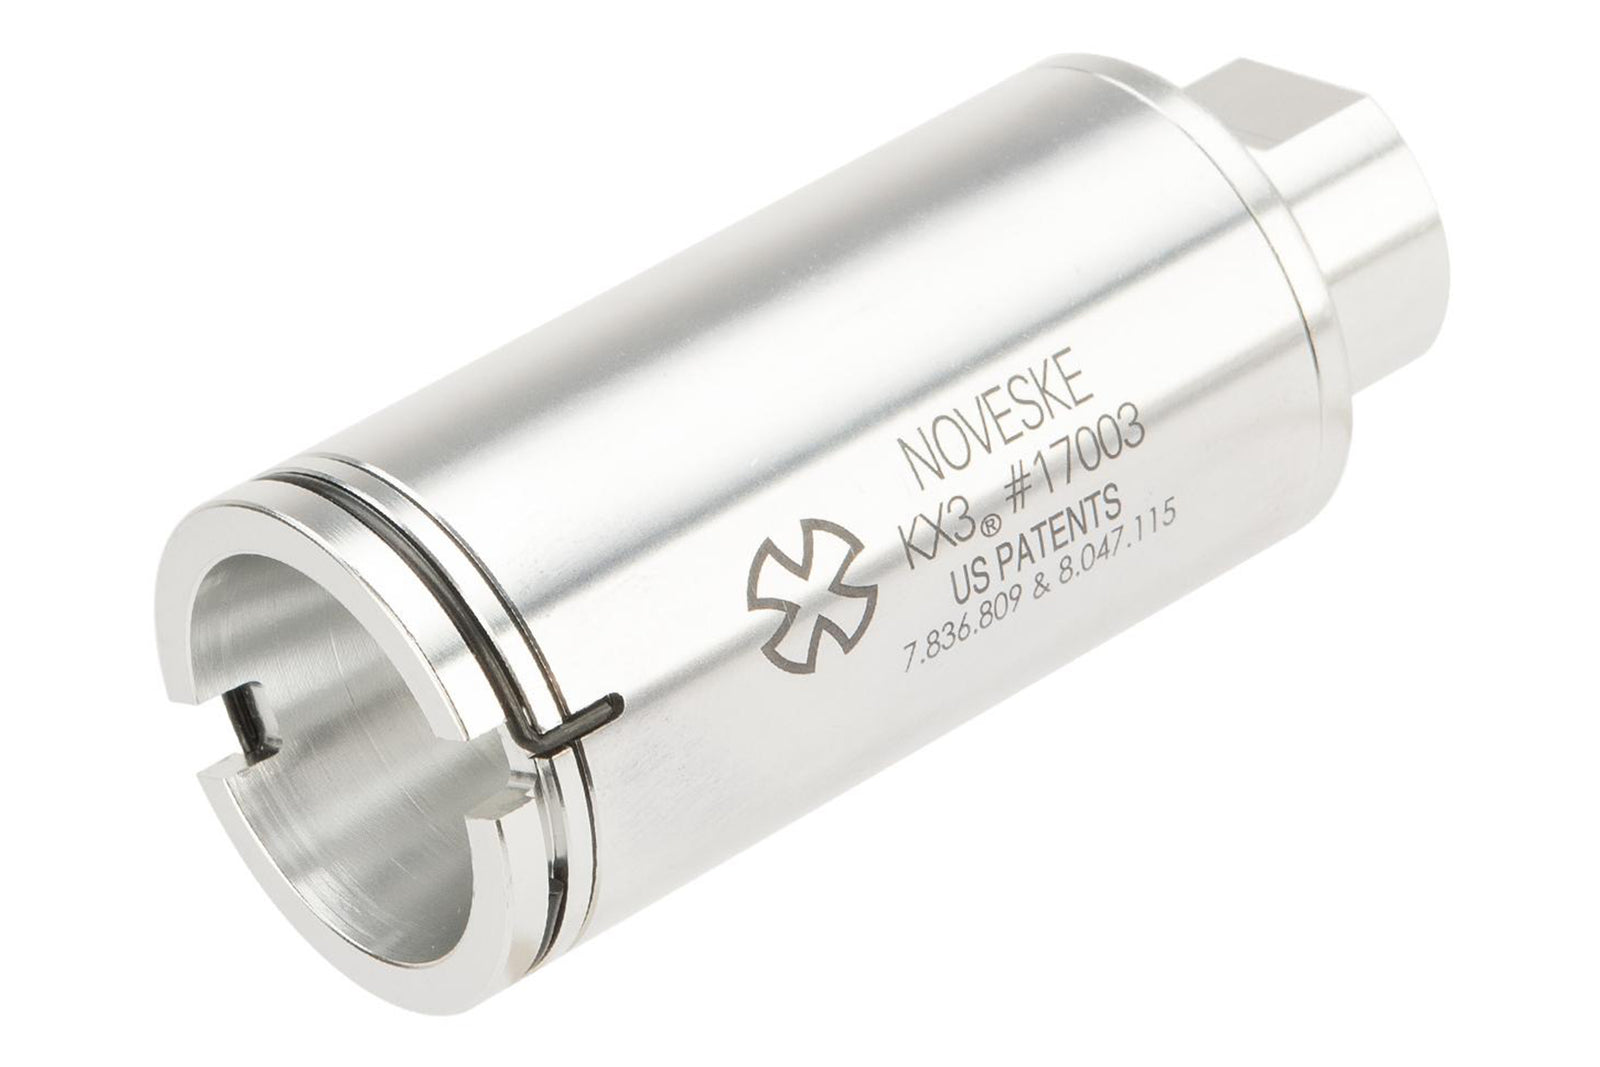 EMG Noveske Flash Hider w/ Built-In ACETECH Lighter S Ultra Compact Rechargeable Tracera